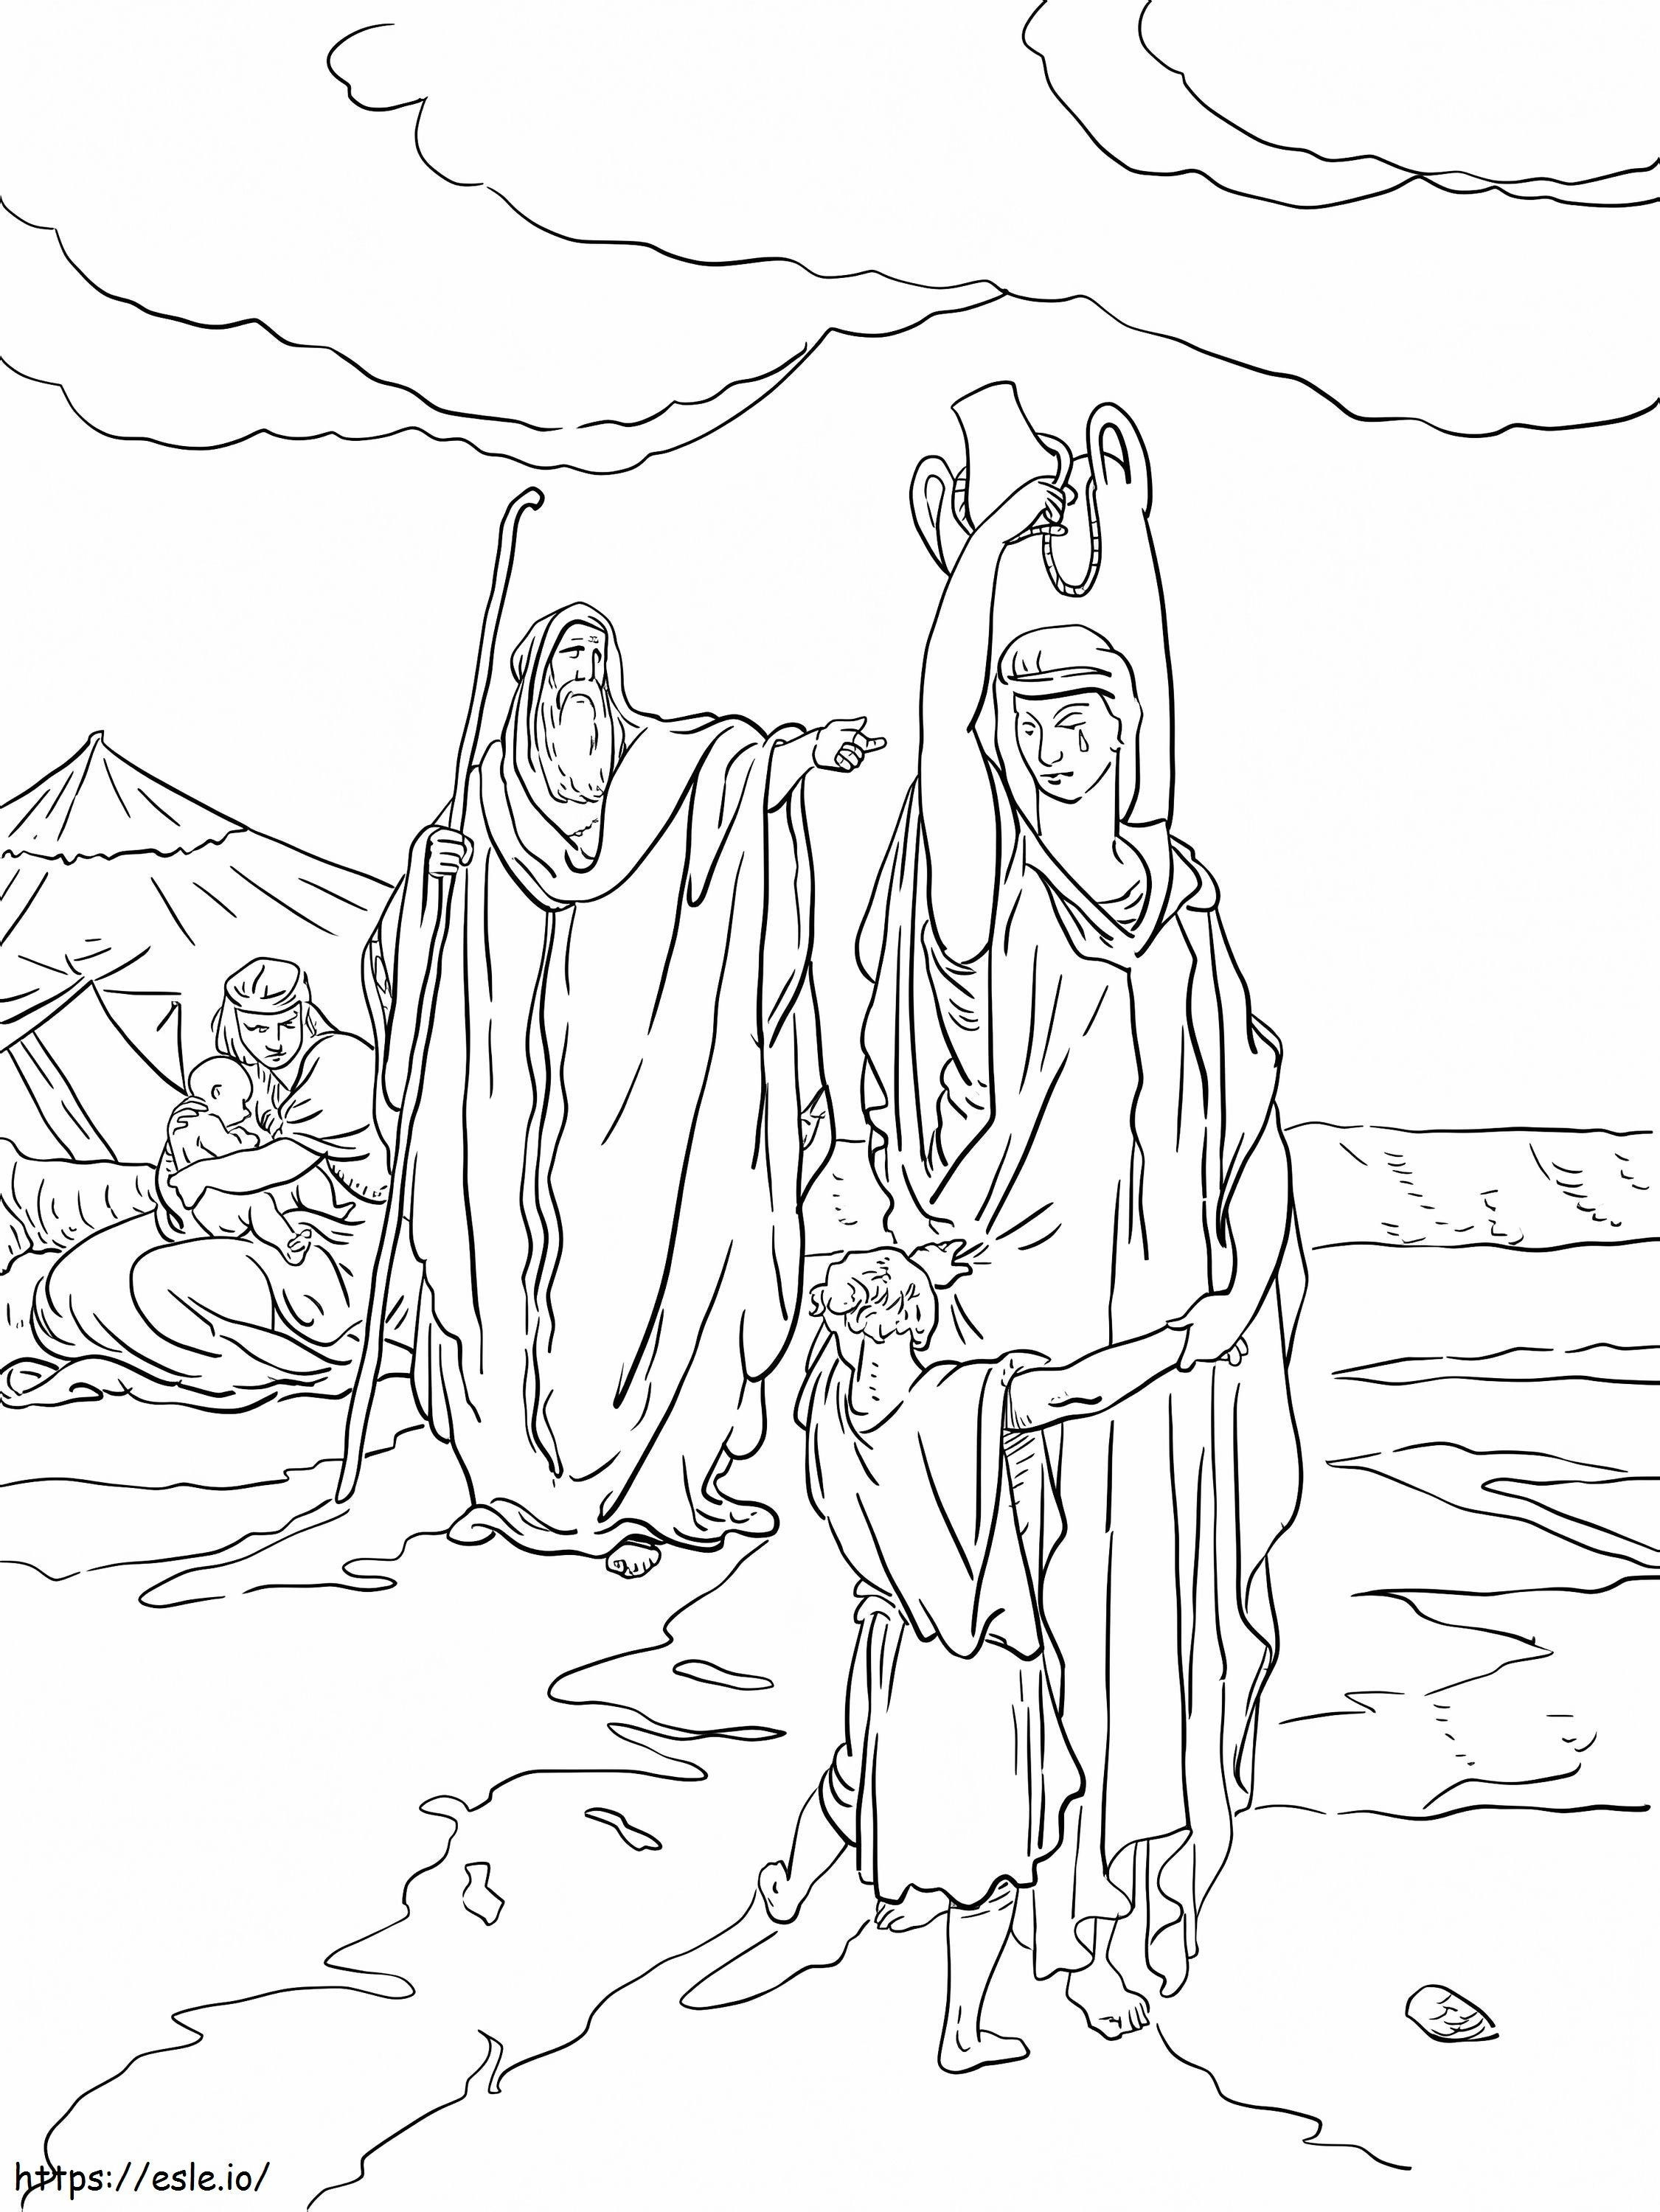 The Expulsion Of Hagar And Ishmael coloring page